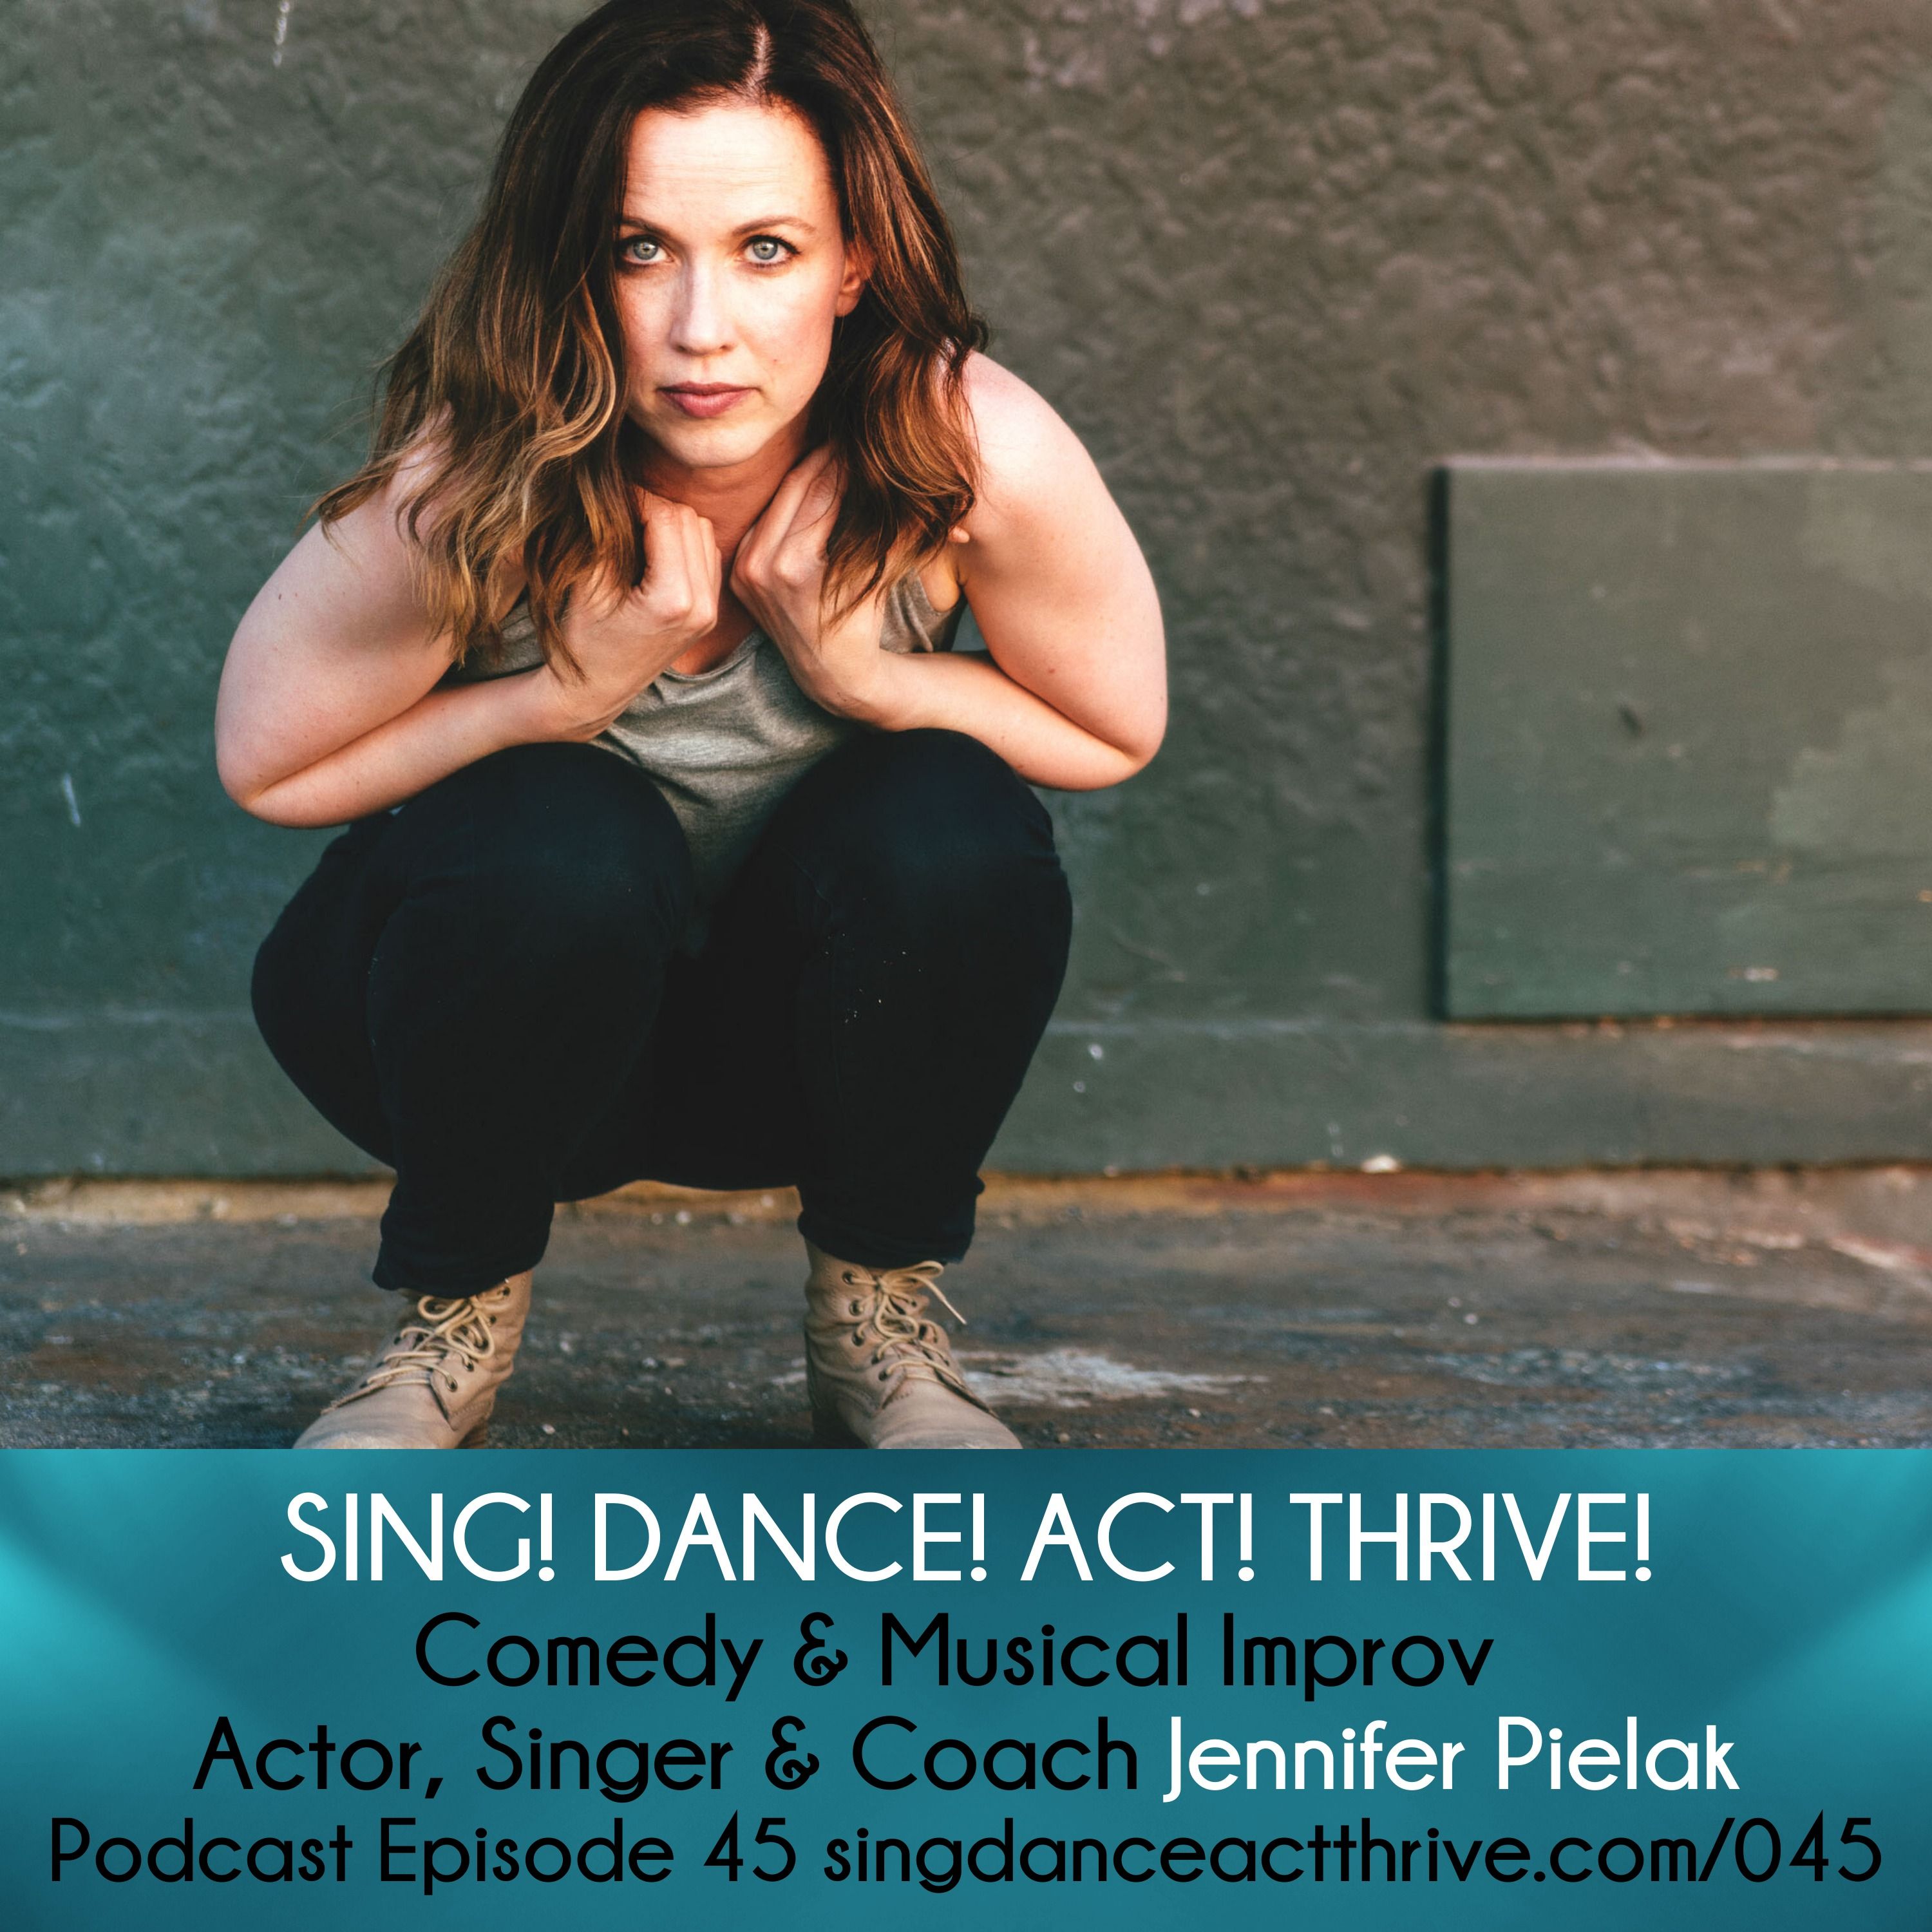 Jennifer Pielak: Comedy & Musical Improv Actor, Singer & Coach hero artwork